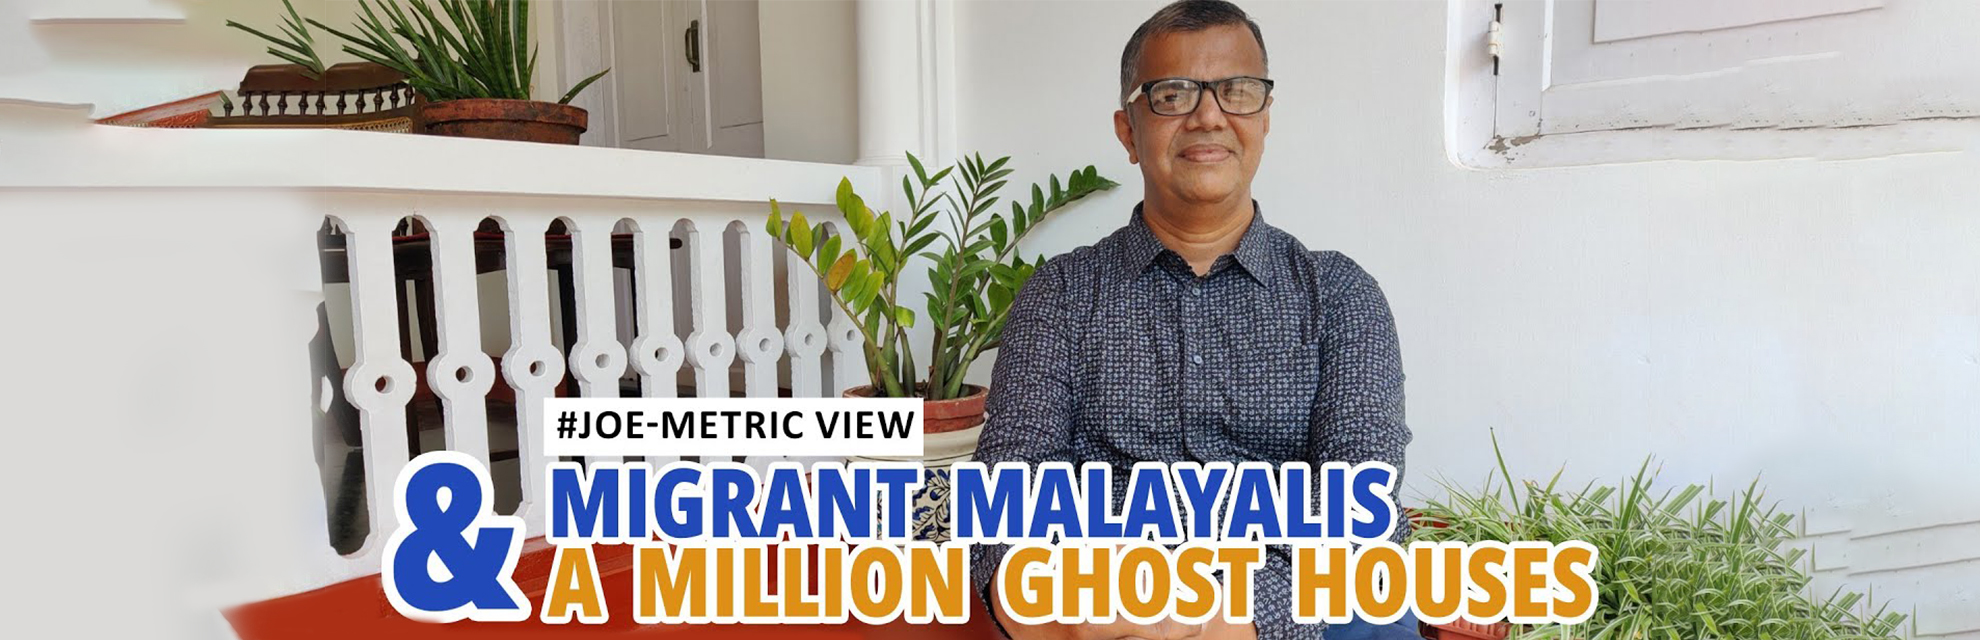 Migrant Malayalis & a million ghost houses | Joe-metric View